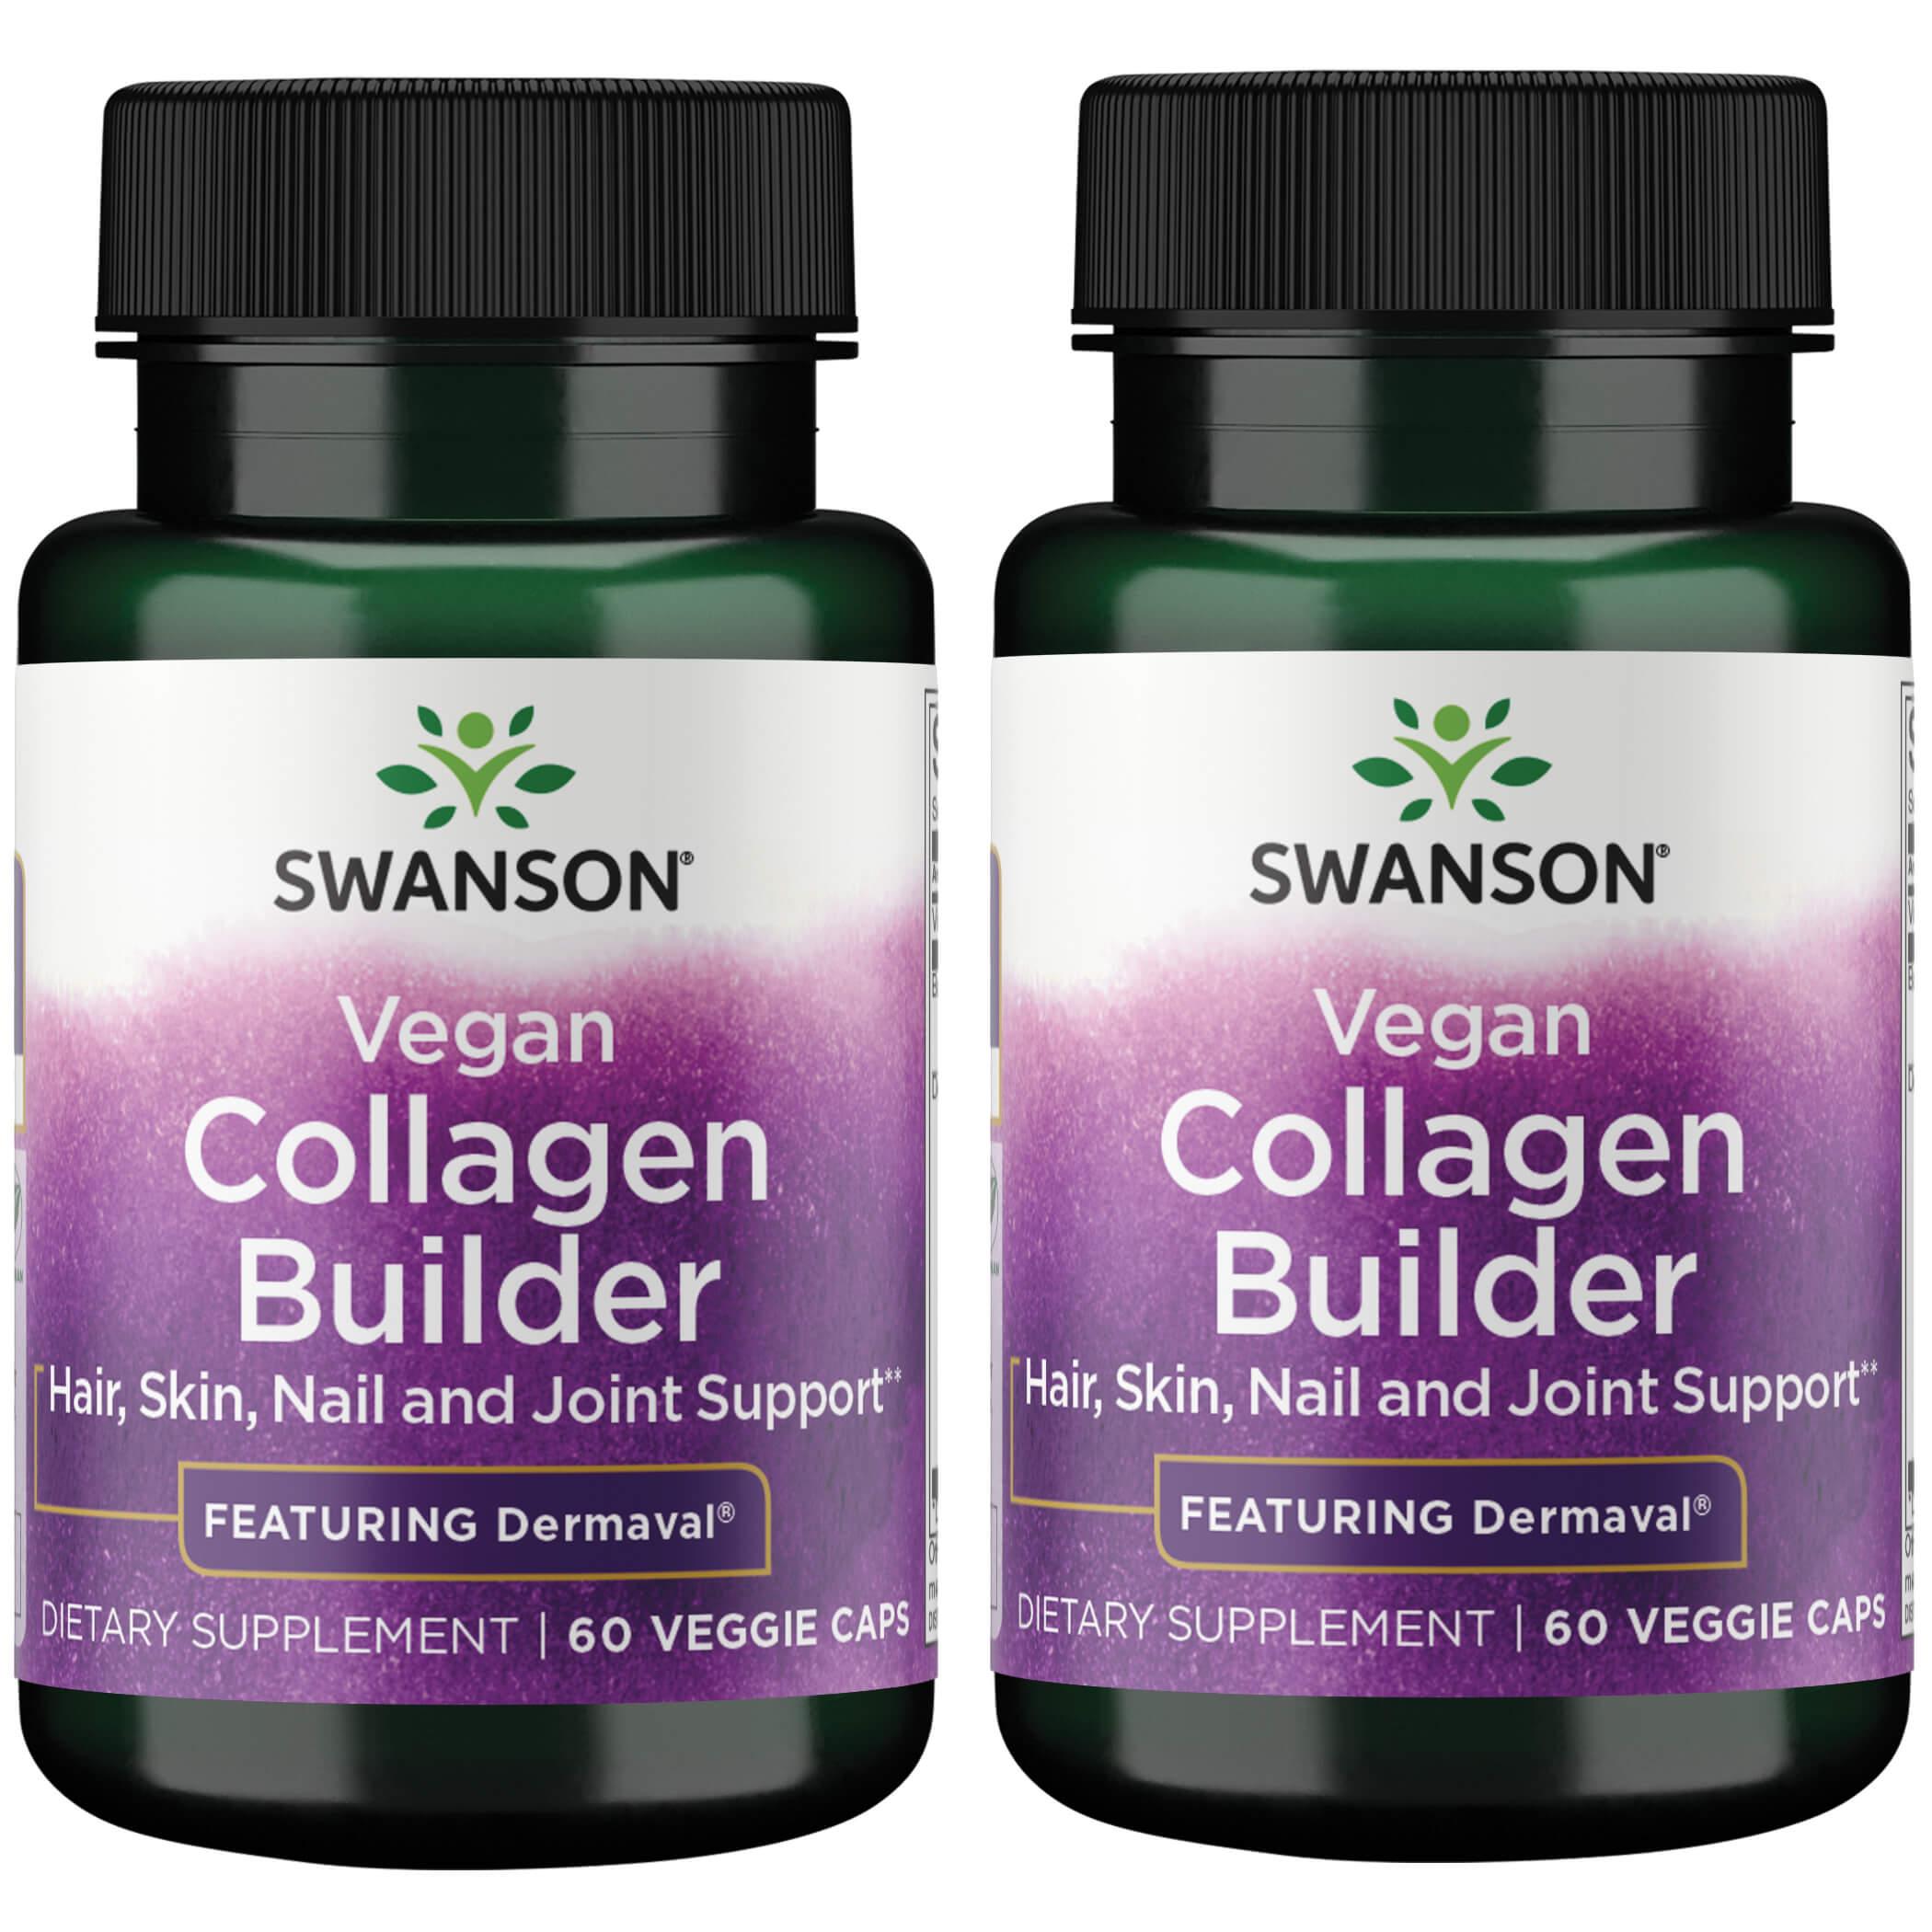 Swanson Premium Vegan Collagen Builder - Featuring Dermaval 2 Pack Supplement Vitamin 60 Veg Caps